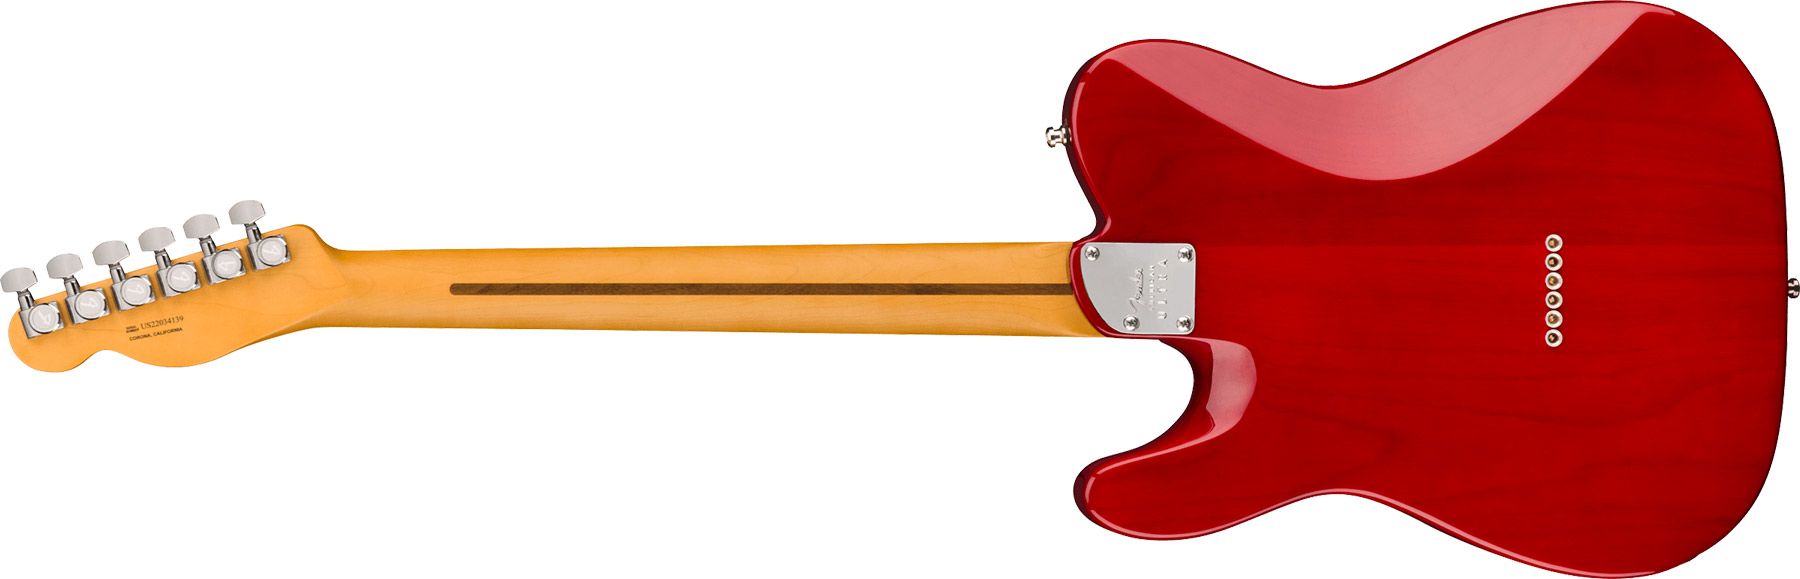 Fender Tele American Ultra Ltd Usa 2s Ht Eb - Umbra - Tel shape electric guitar - Variation 1